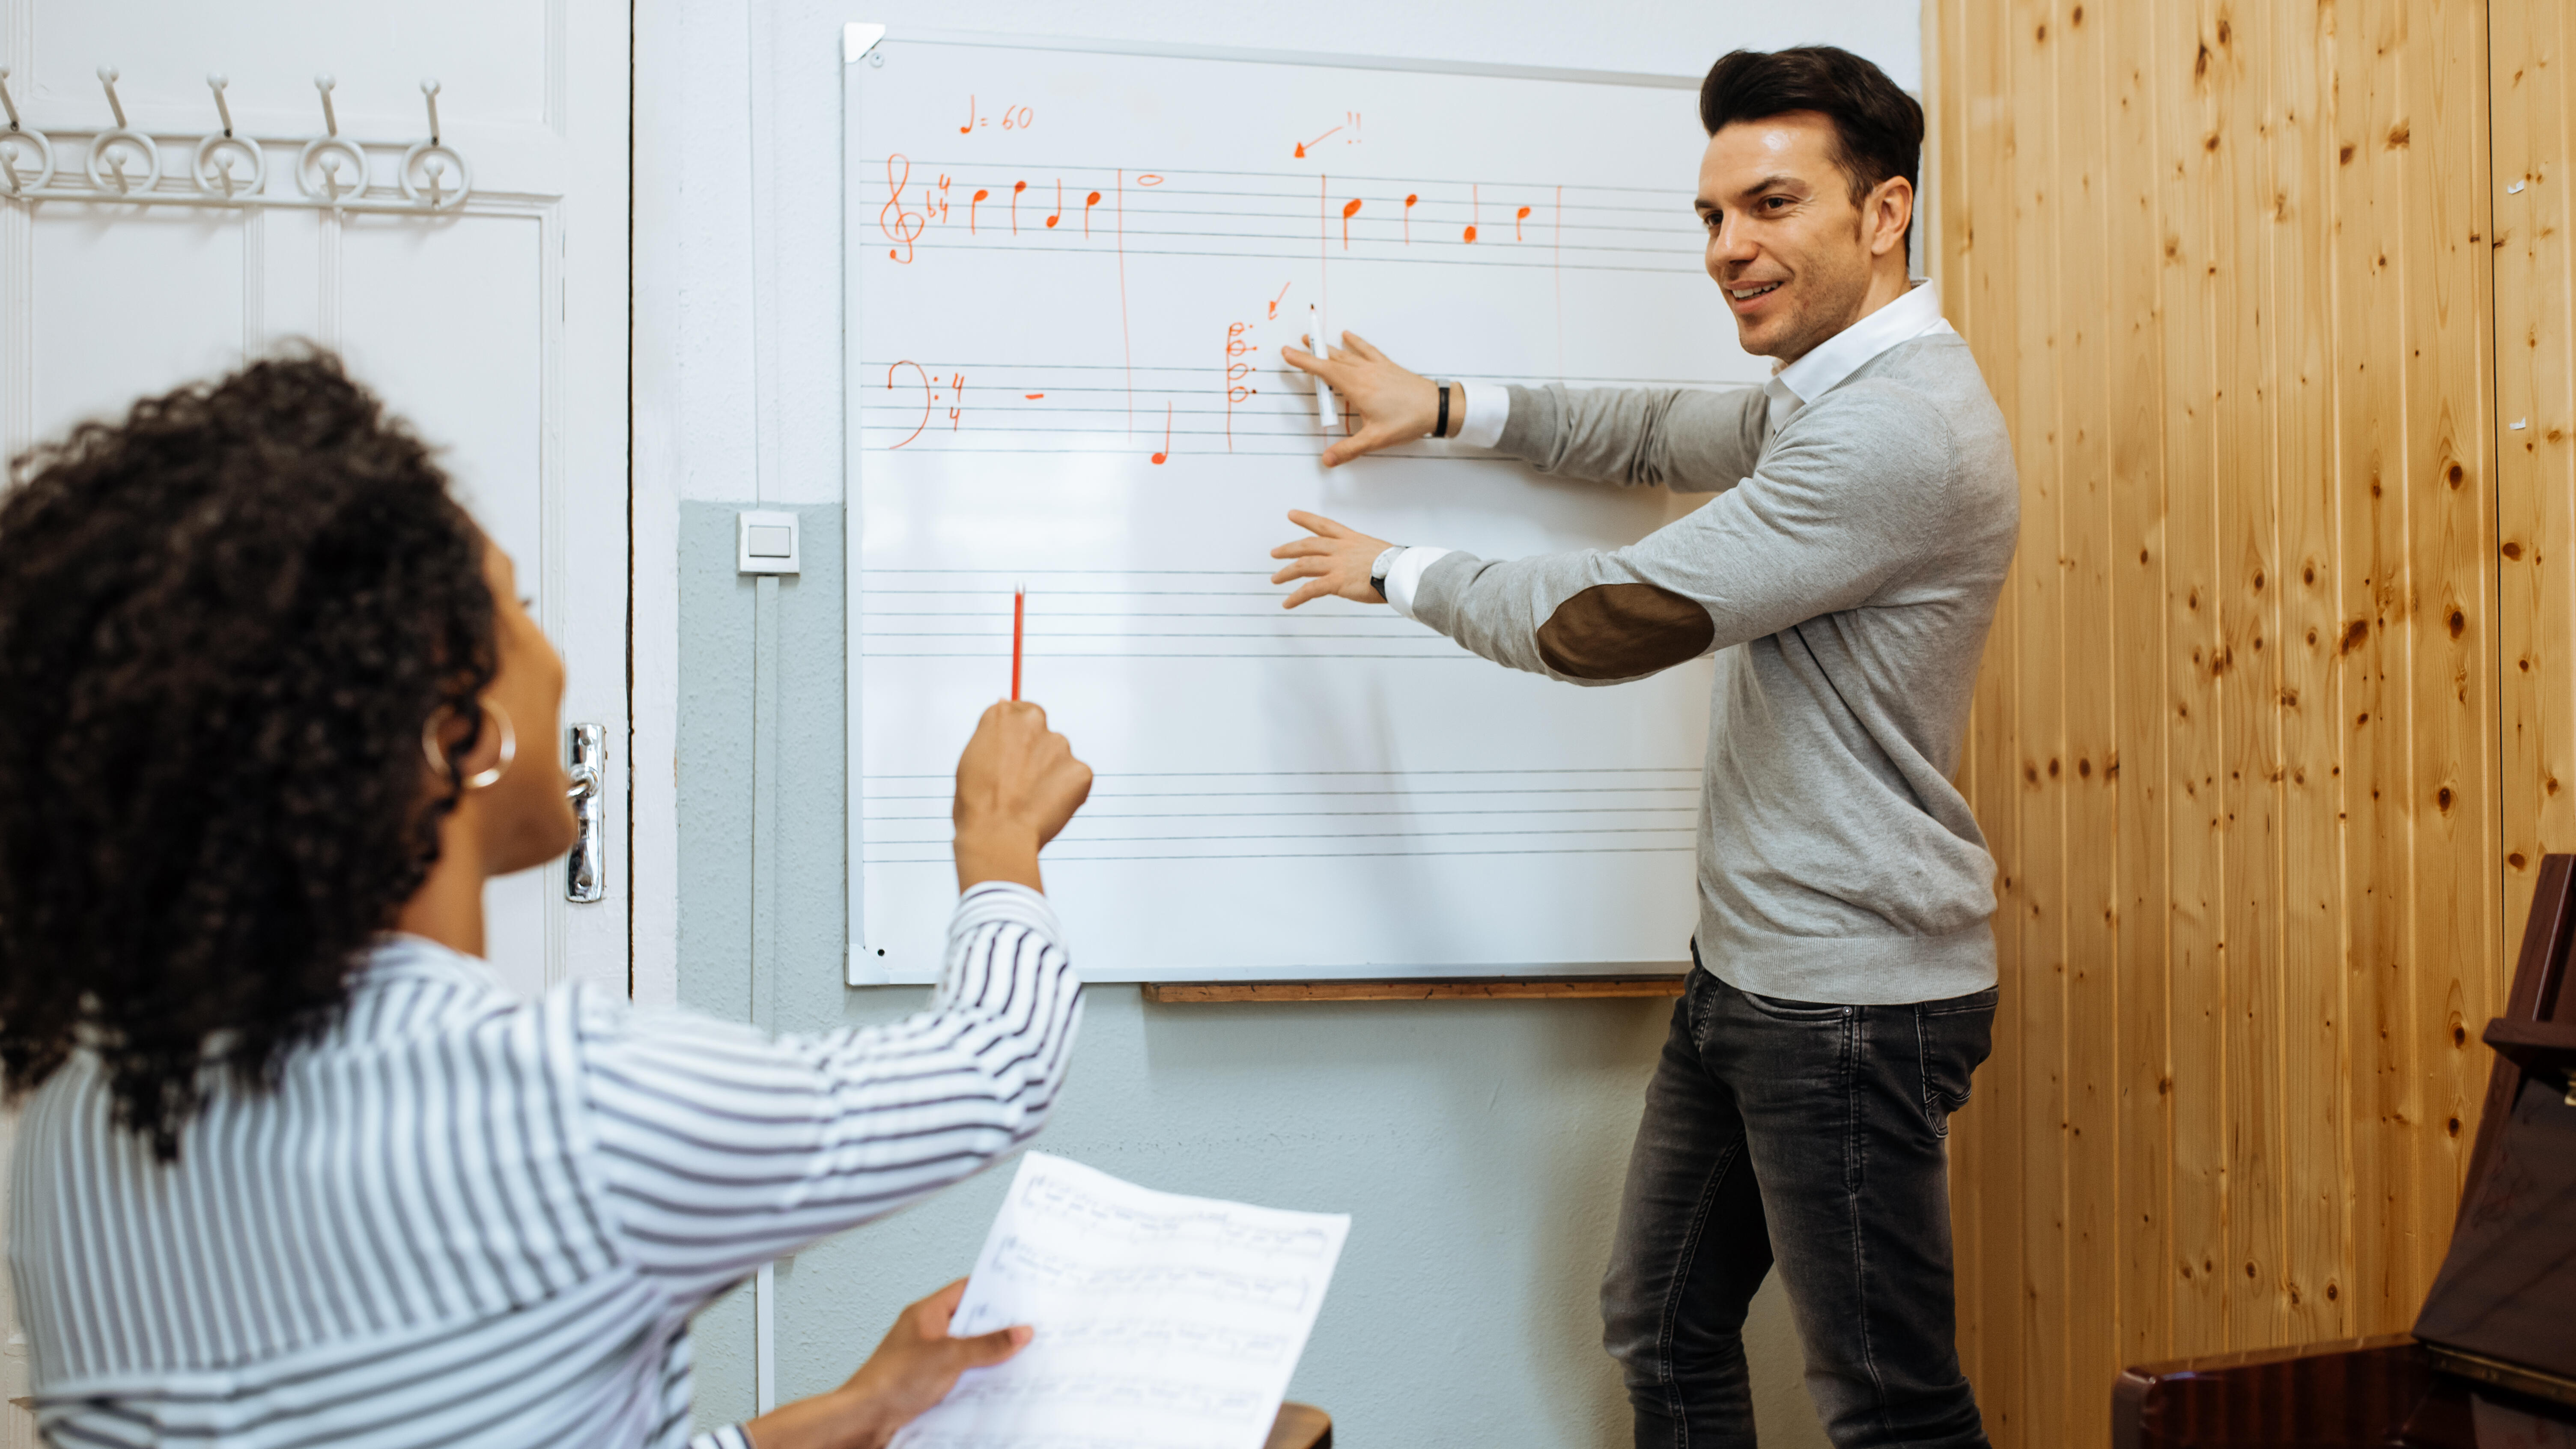 Man teaching woman music notes